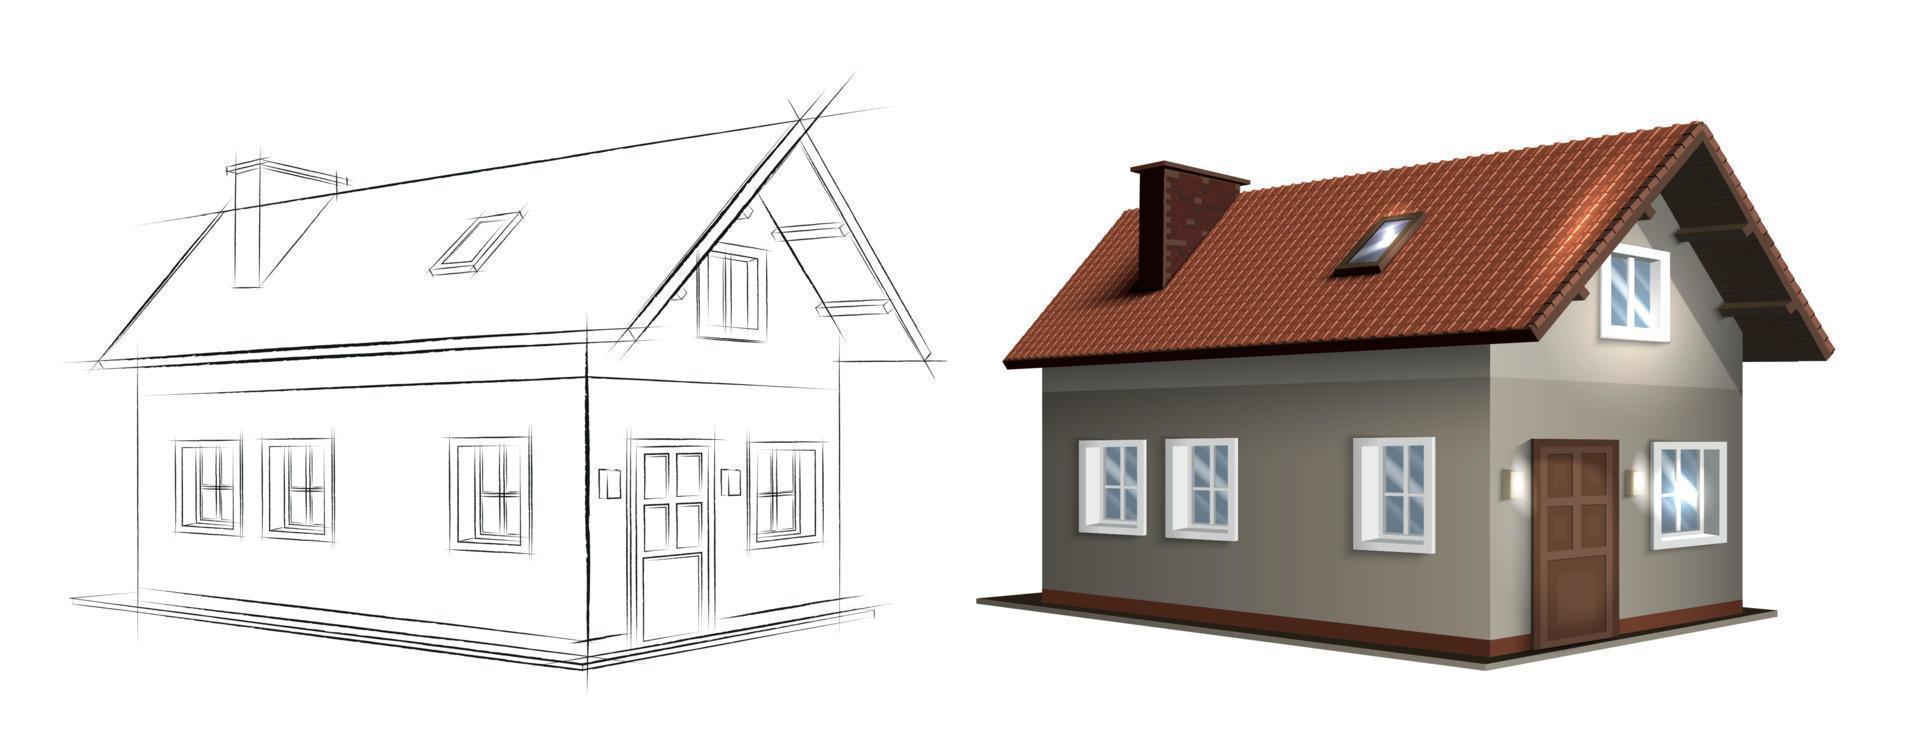 realistiska hus ritset vektor